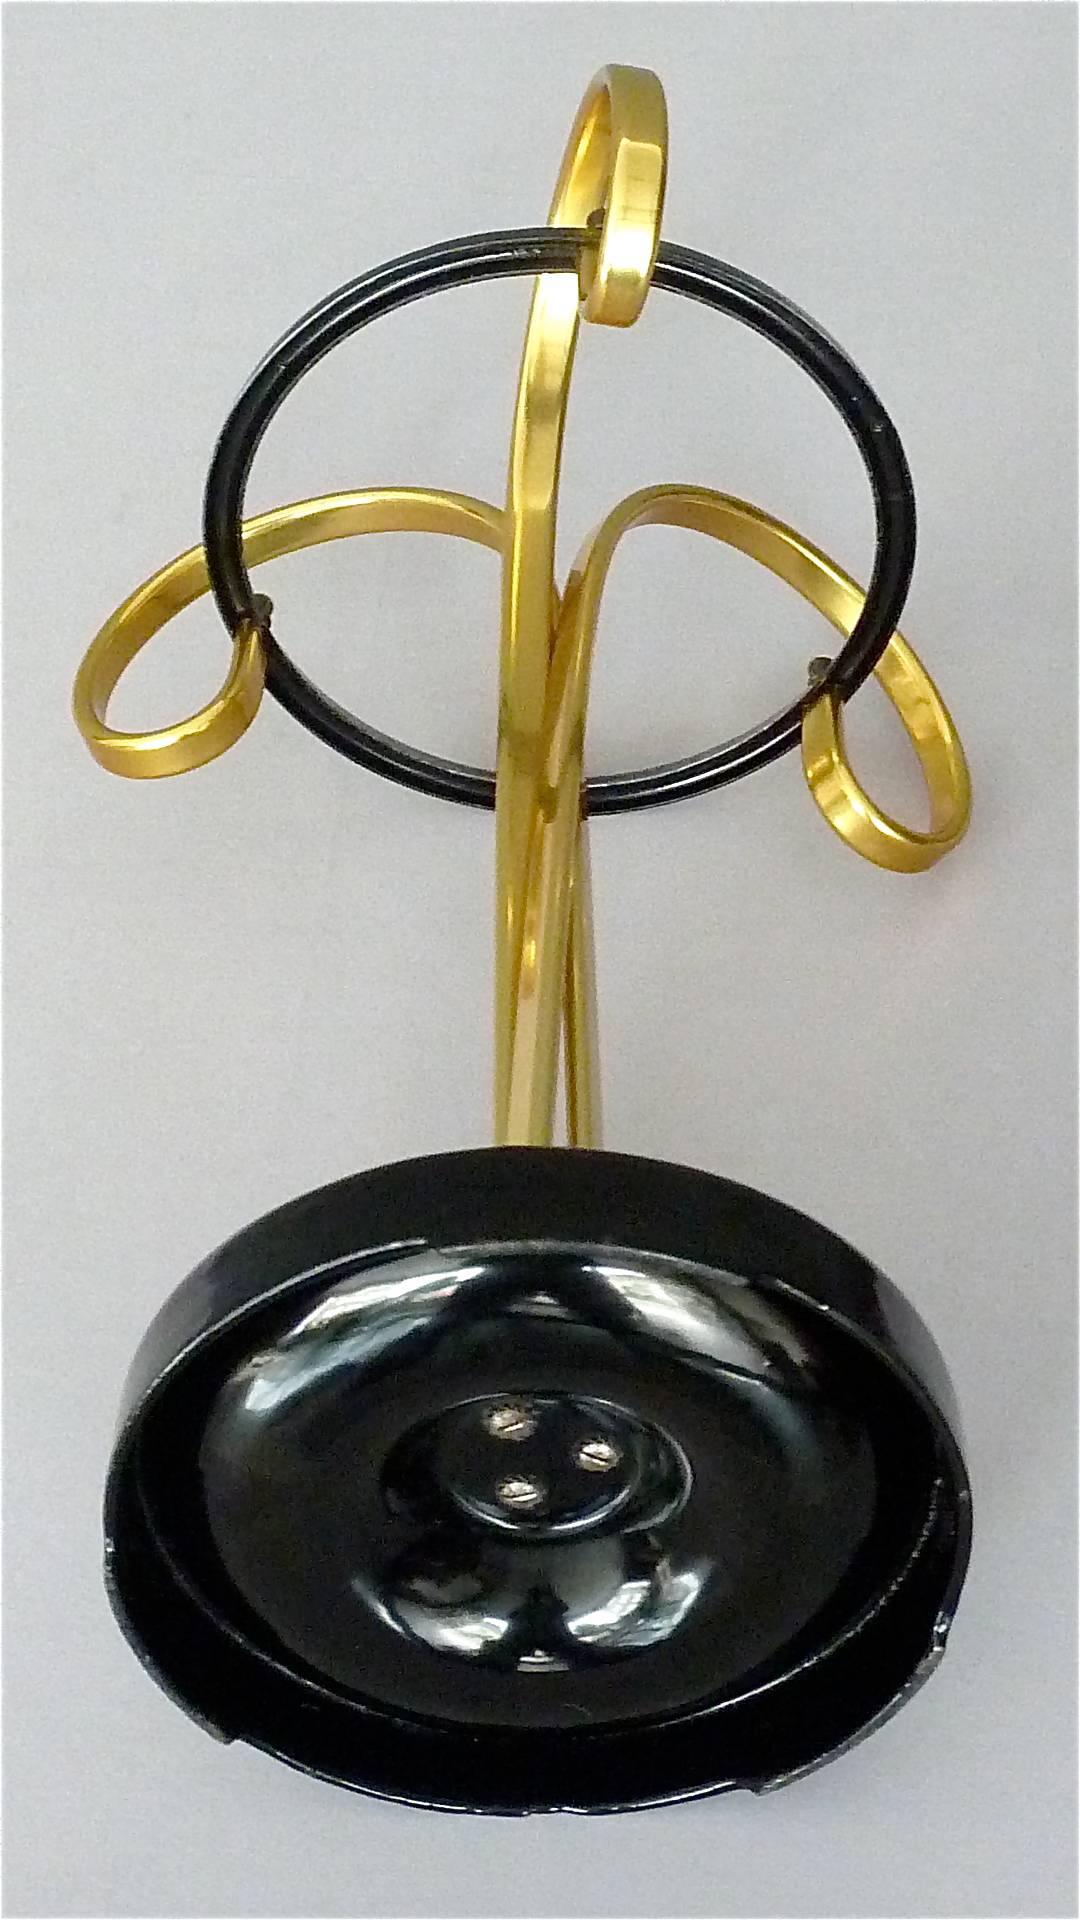 Sculptural 1950s Midcentury Umbrella Stand Golden Anodized Aluminum Black Iron For Sale 9